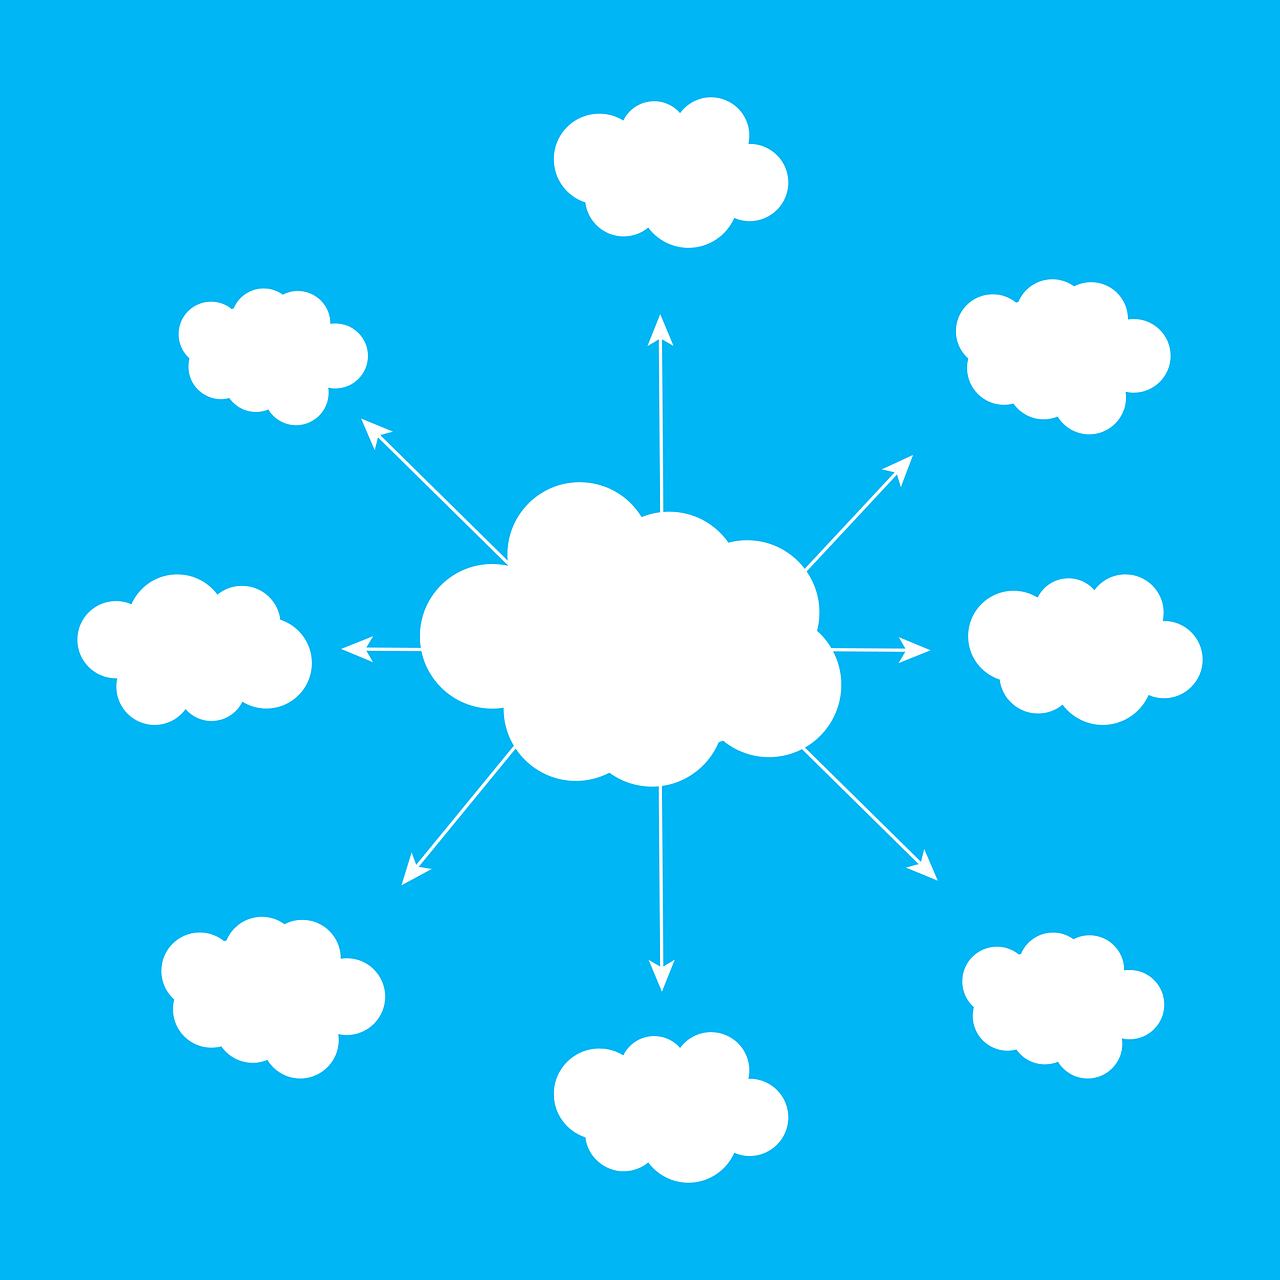 Облака Векторная Графика. Облачко Графика. Кластер облака. Кластер в виде облака. Cloud graphics